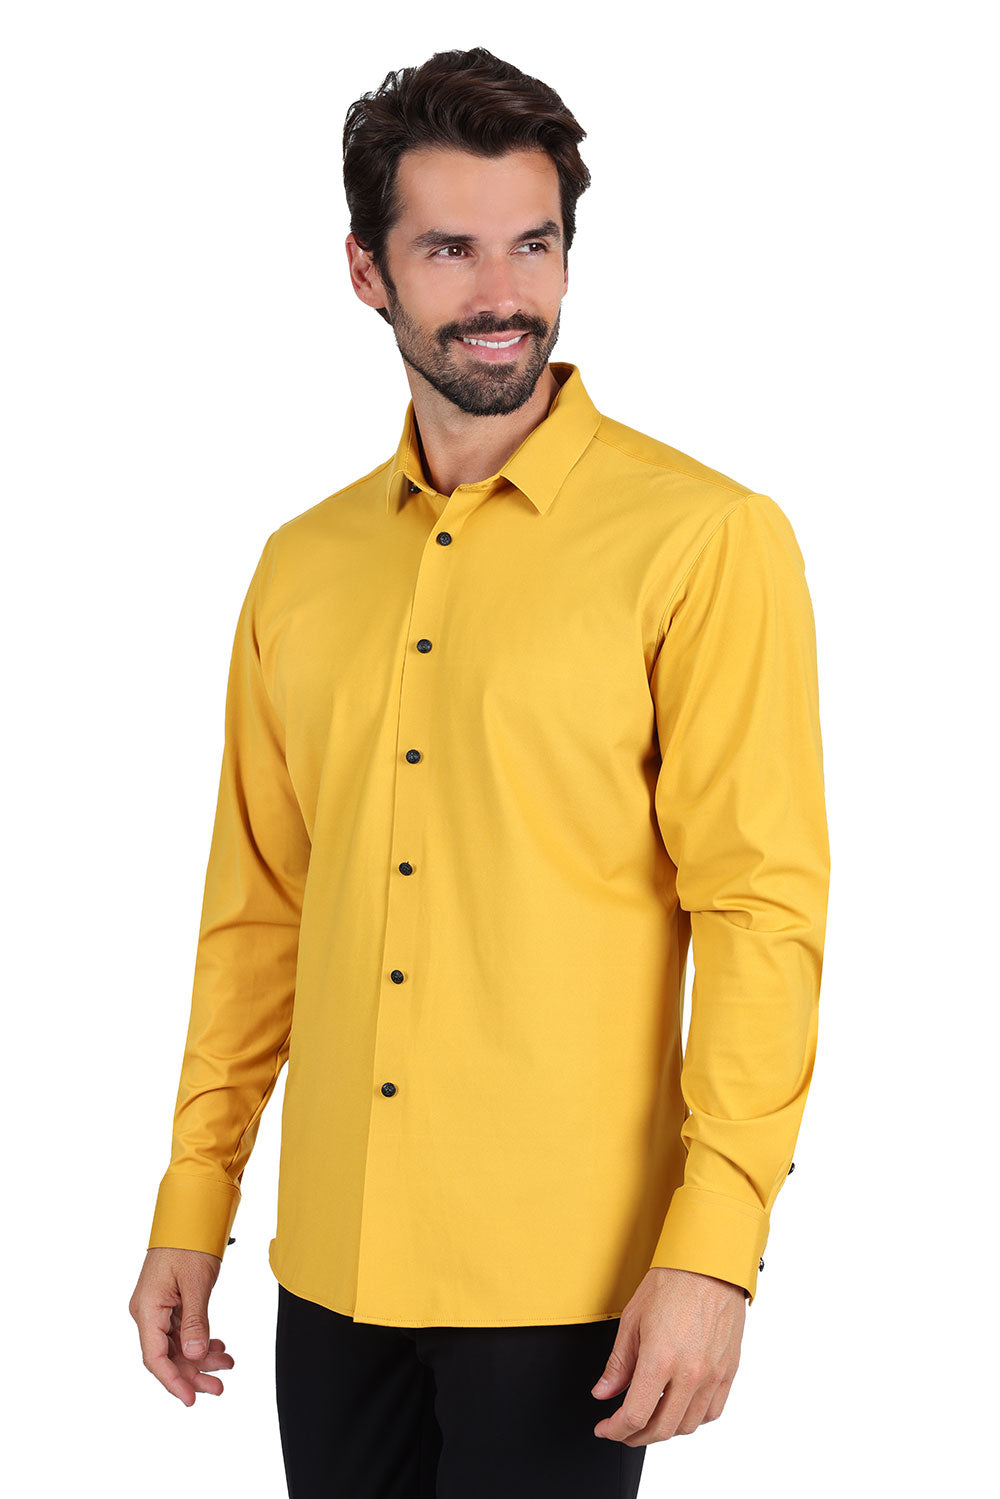 Barabas Men's Premium No Stitches Long Sleeves Shirts 2B400 Mustard